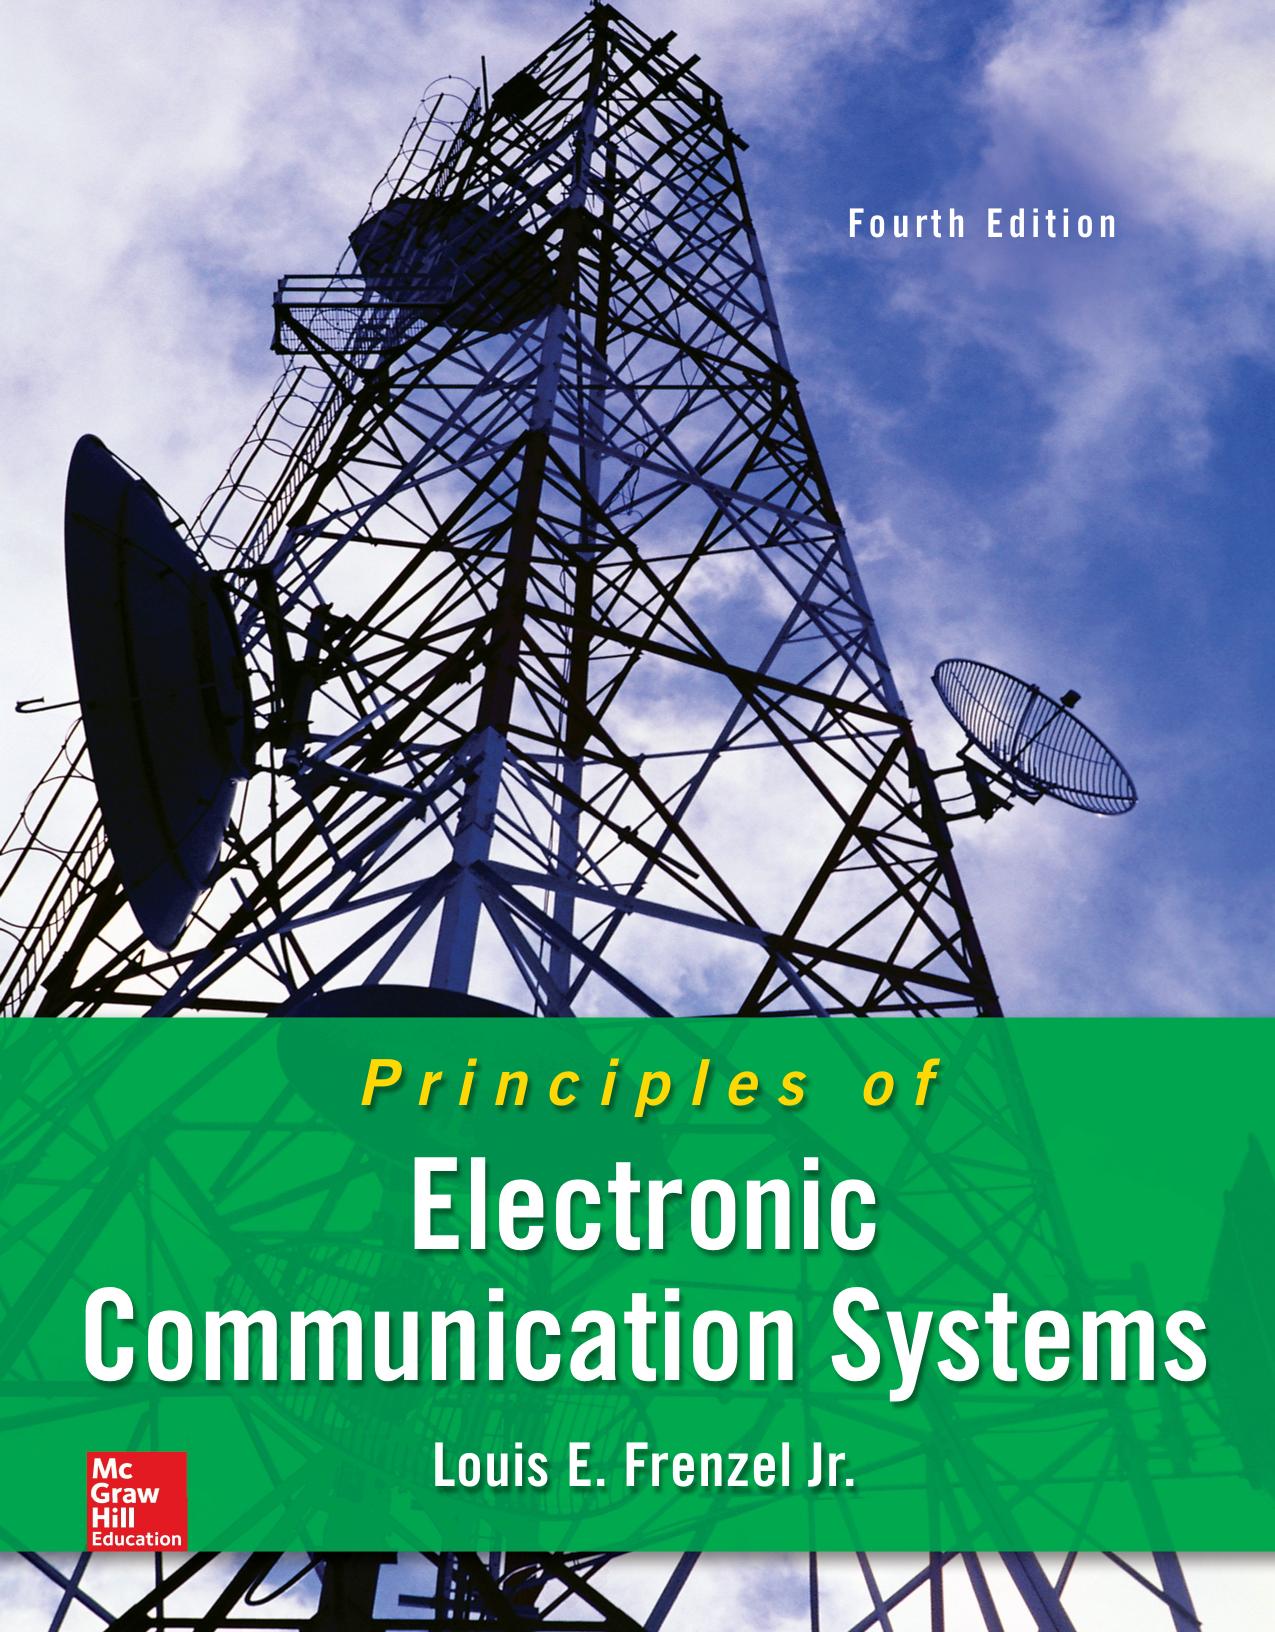 Electronic Communication Systems ( PDFDrive.com ) 2016